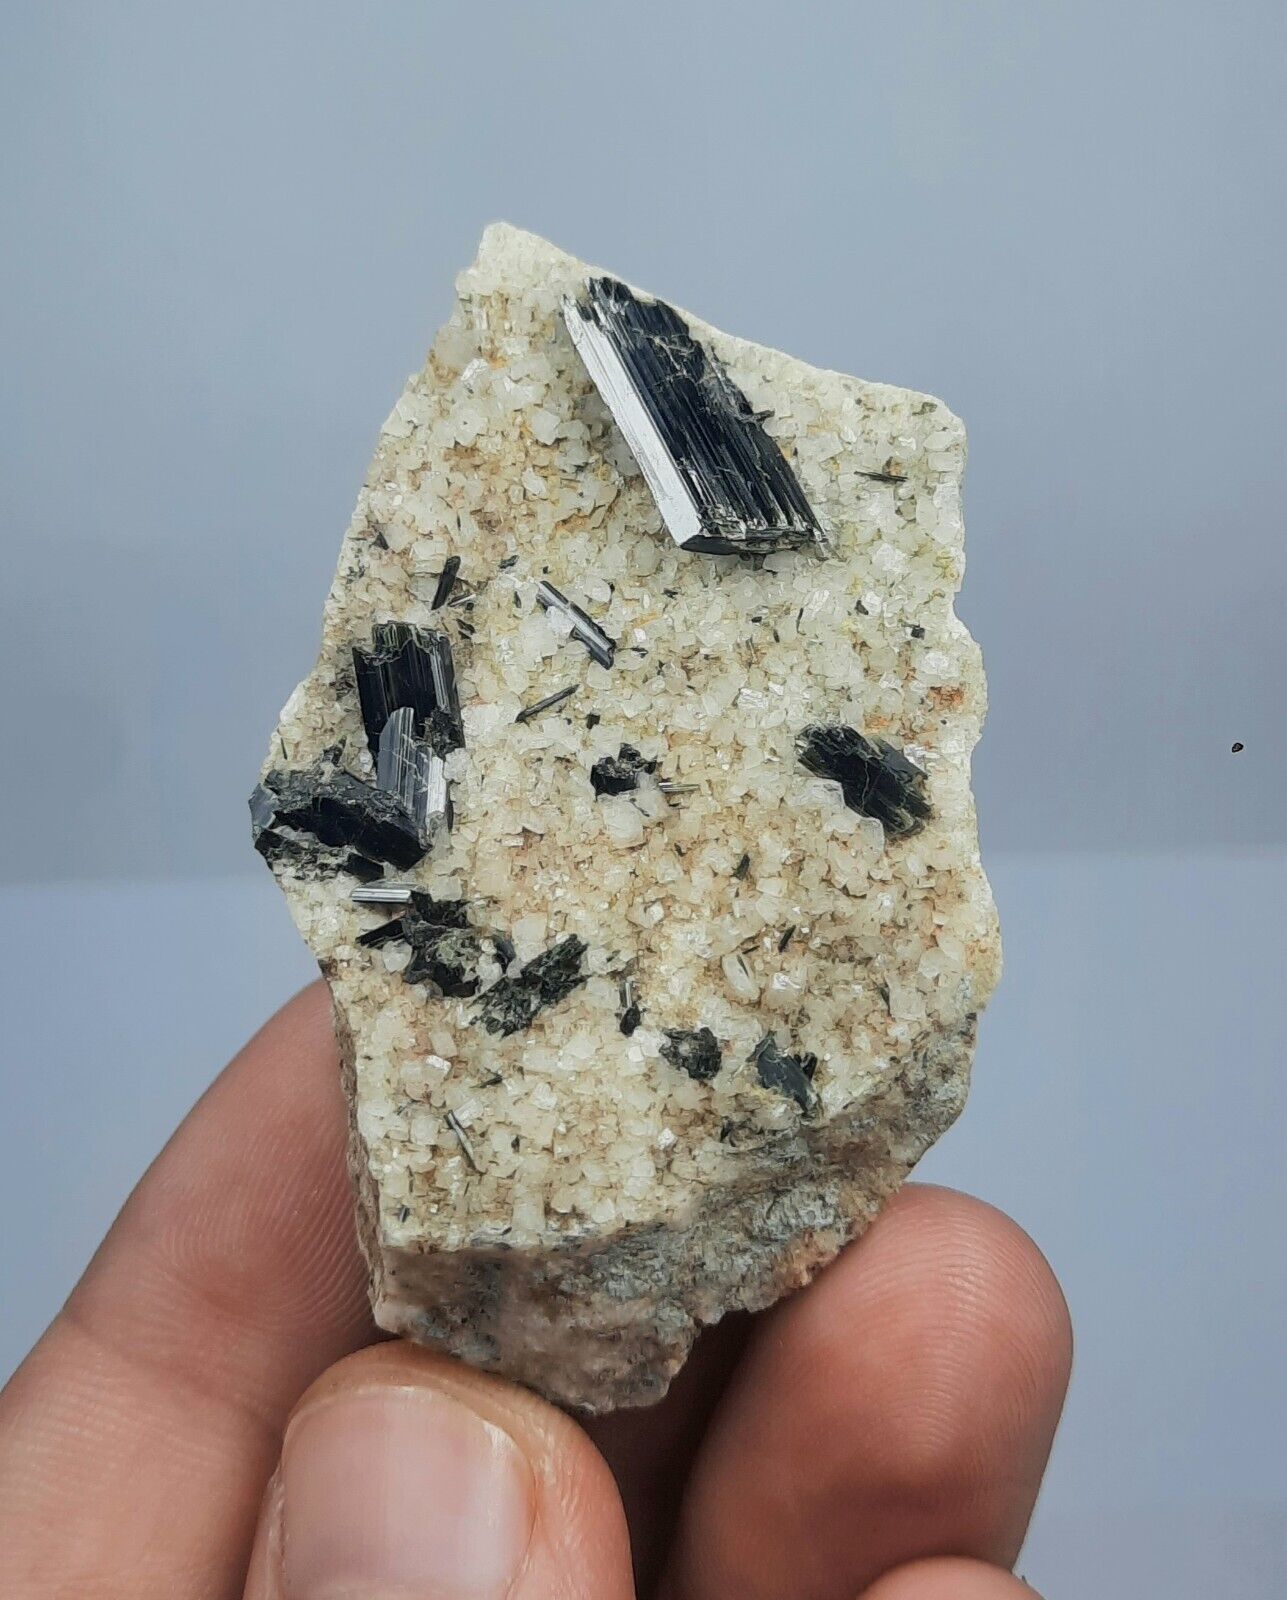 Aegirine Crystals With Albite On Matrix Granite From Zagi Mountains Pakistan.